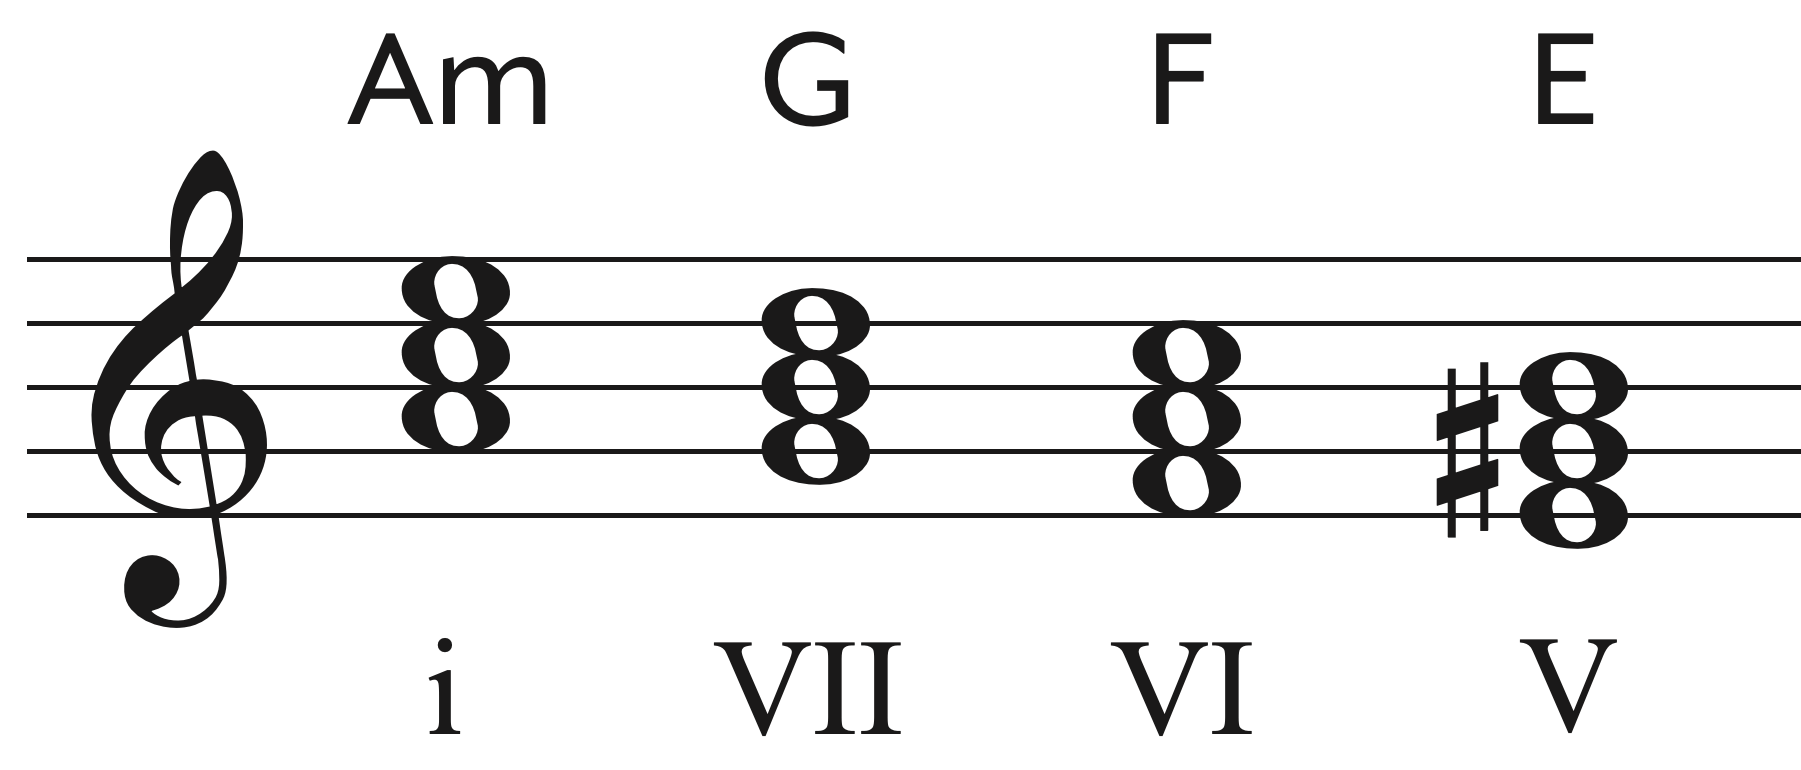 The Am-G-F-E chord progression